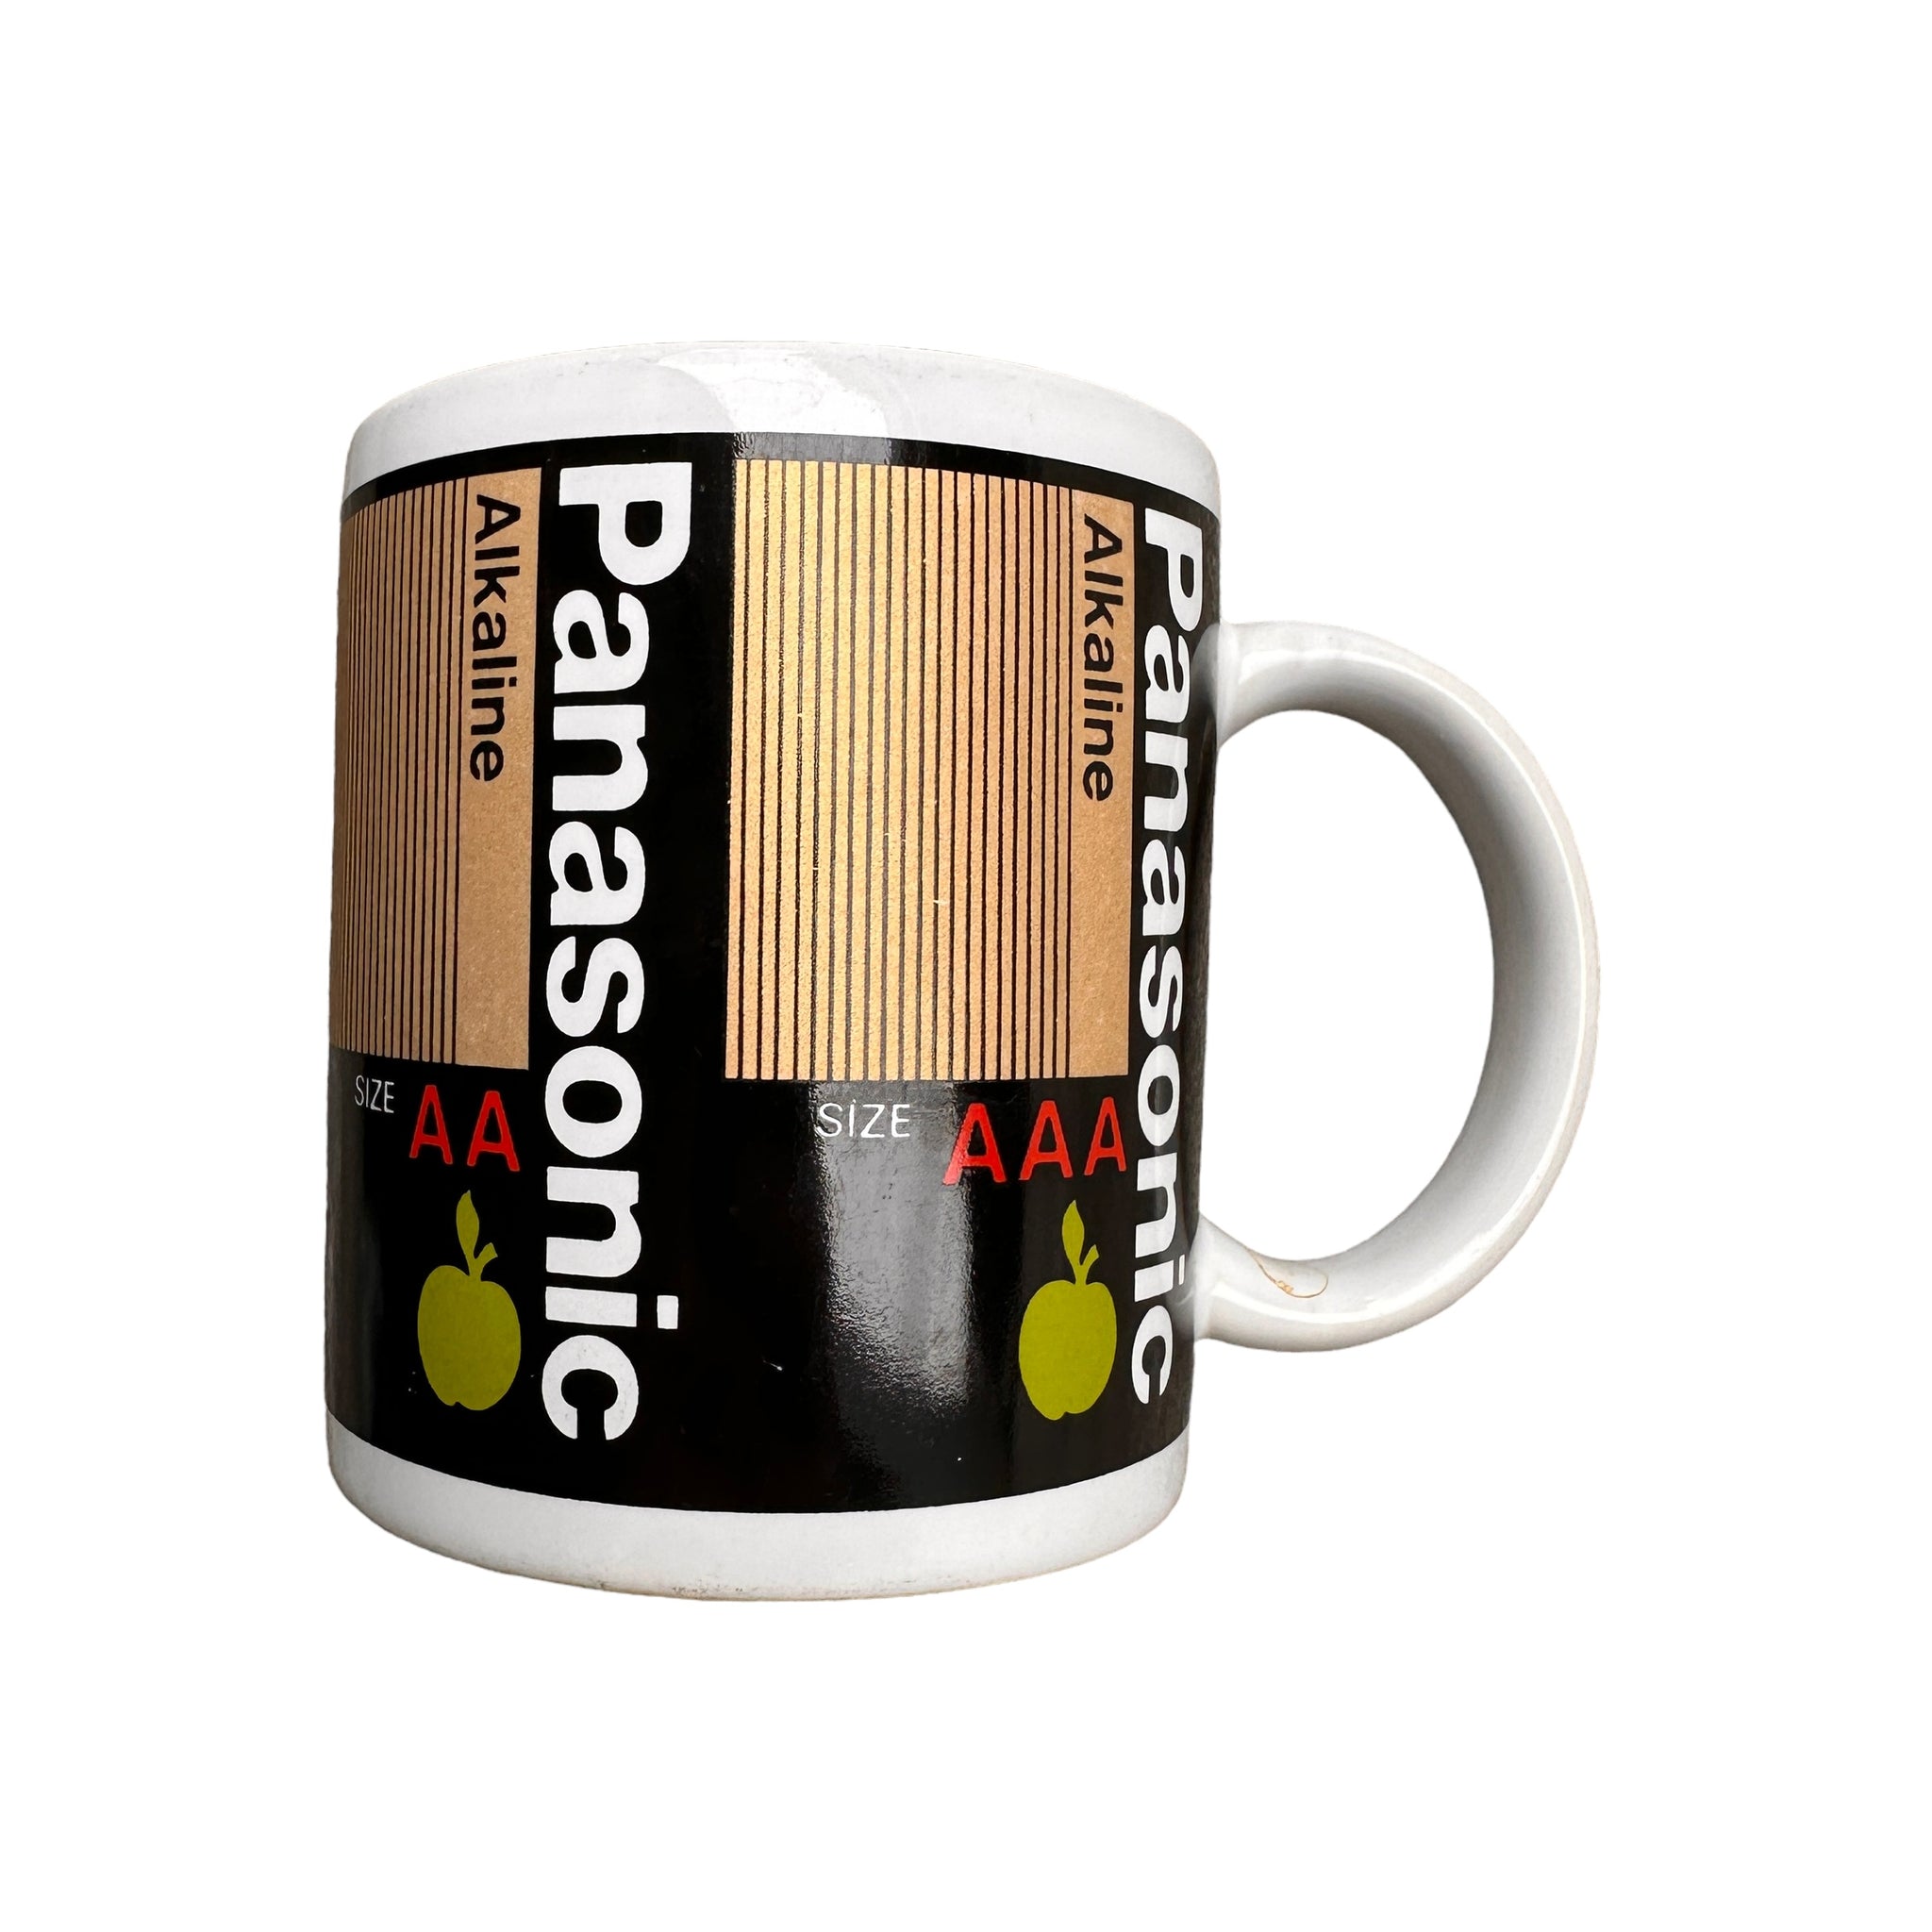 Panasonic battery mug